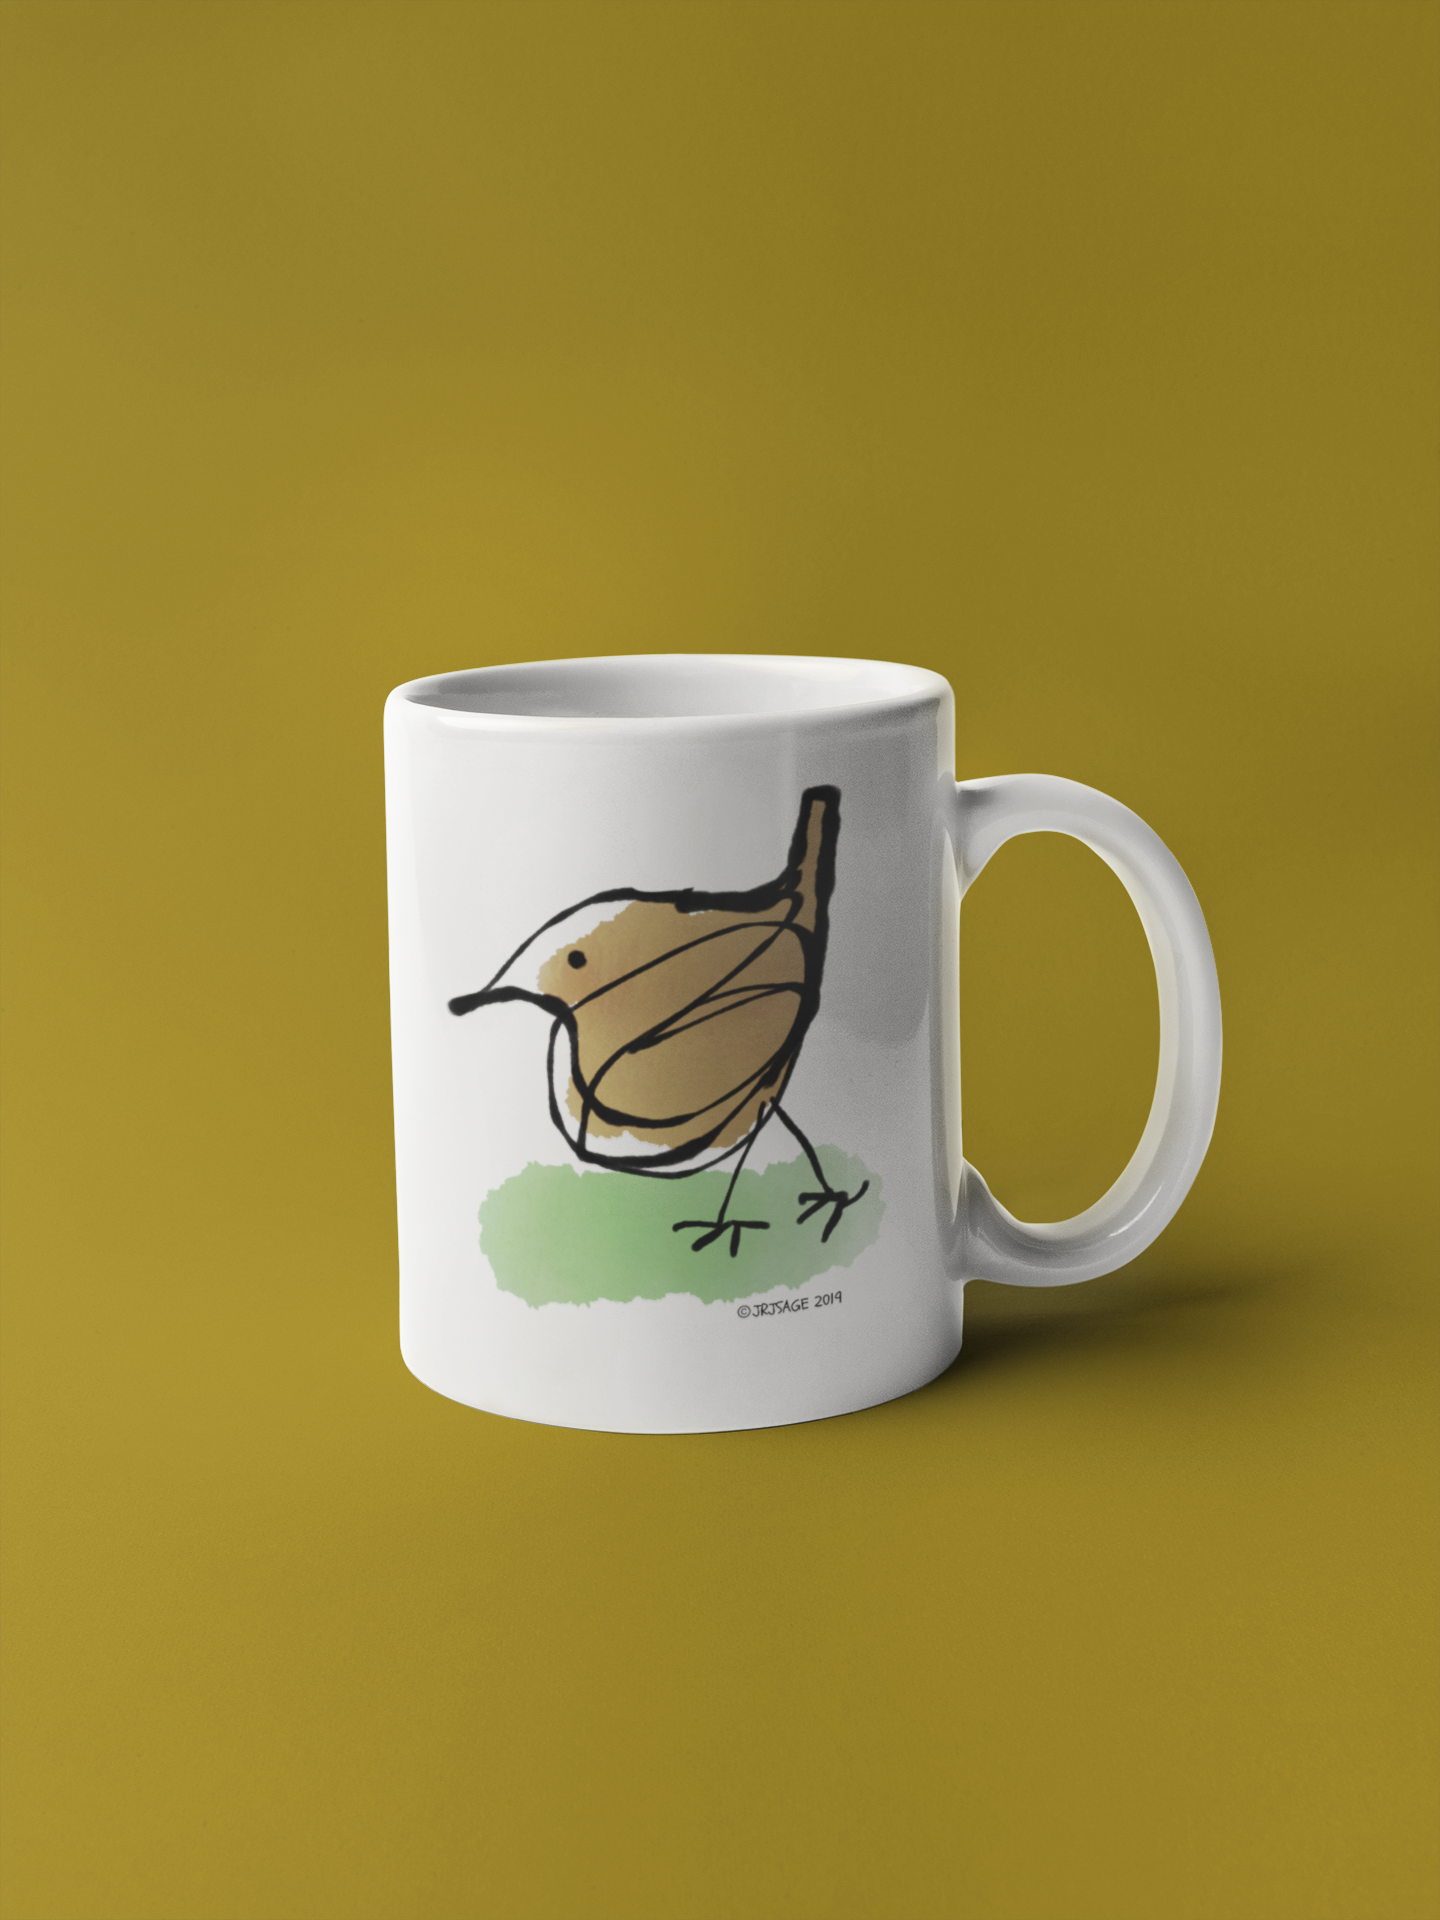 A Jenny Wren bird cute hand drawn illustrated mug design by Hector and Bone